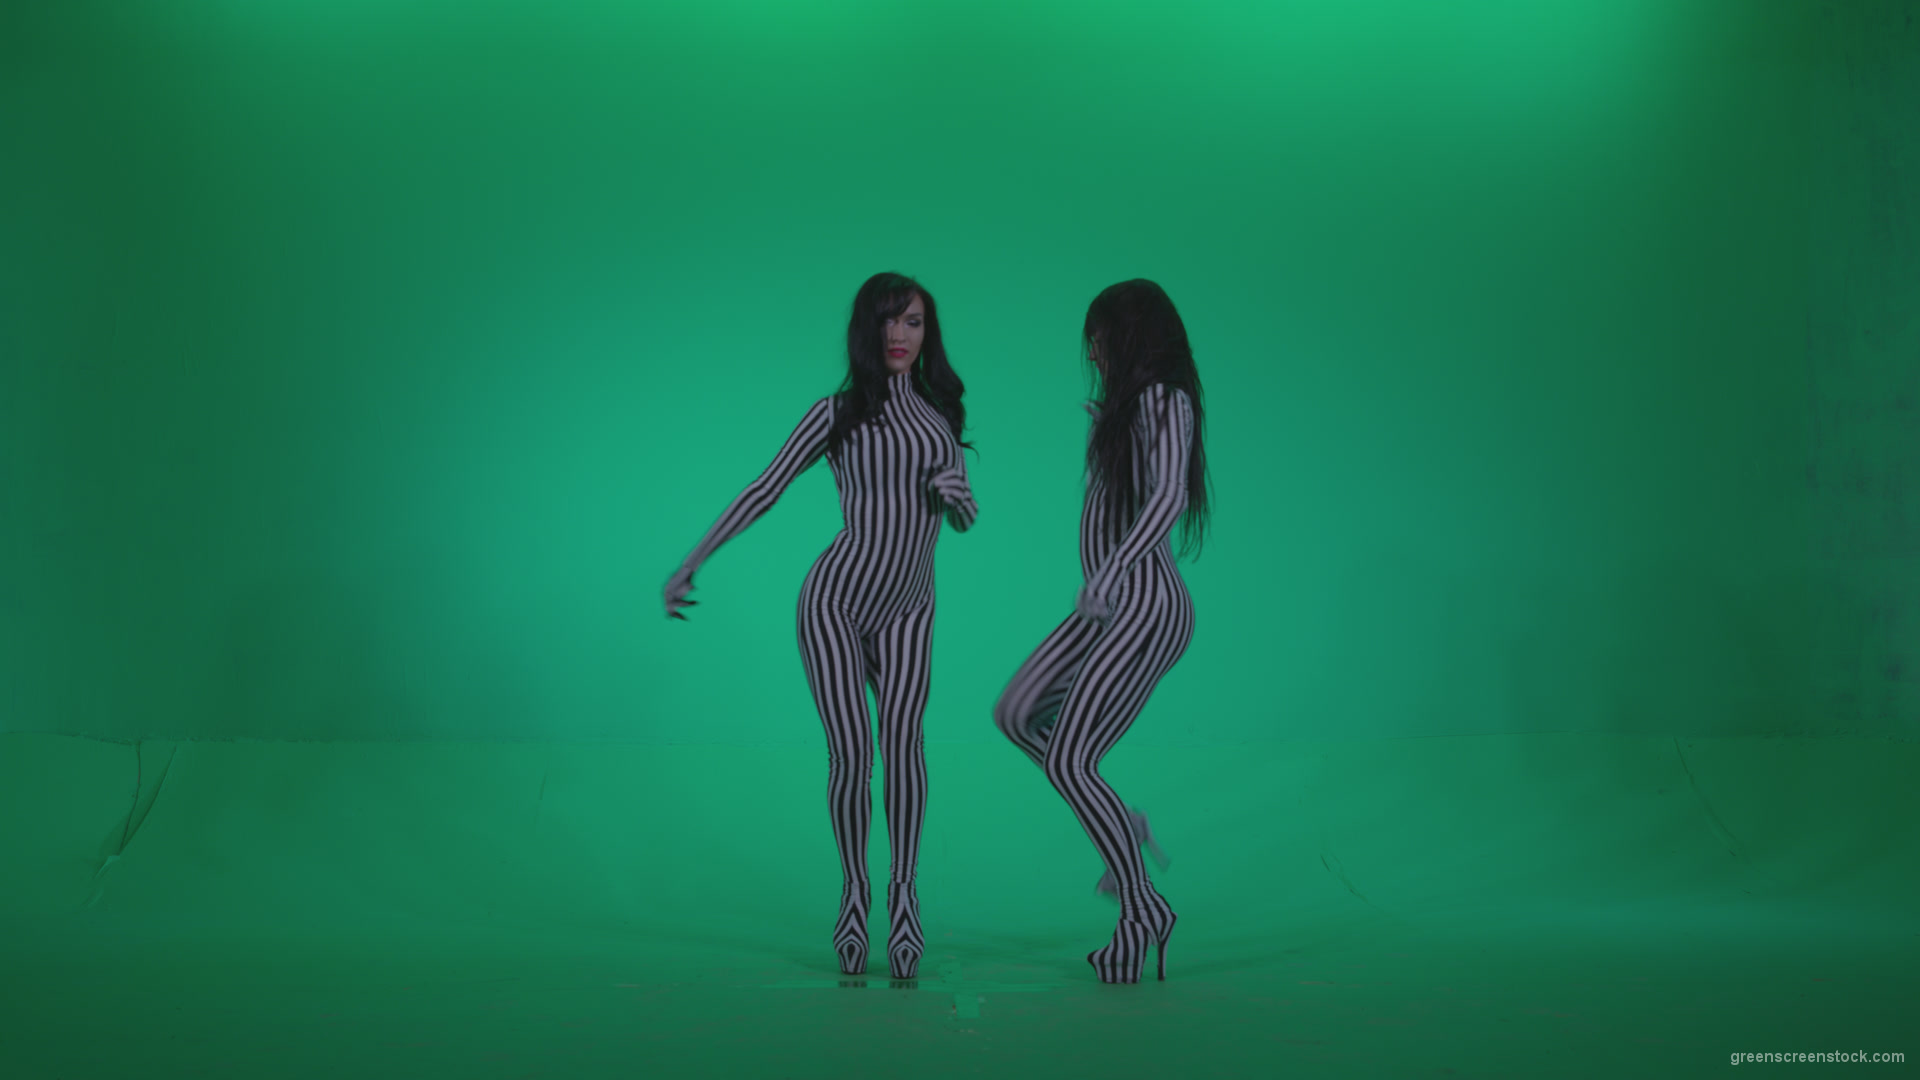 Go-go-Dancer-White-Stripes-s5-Green-Screen-Video-Footage_005 Green Screen Stock